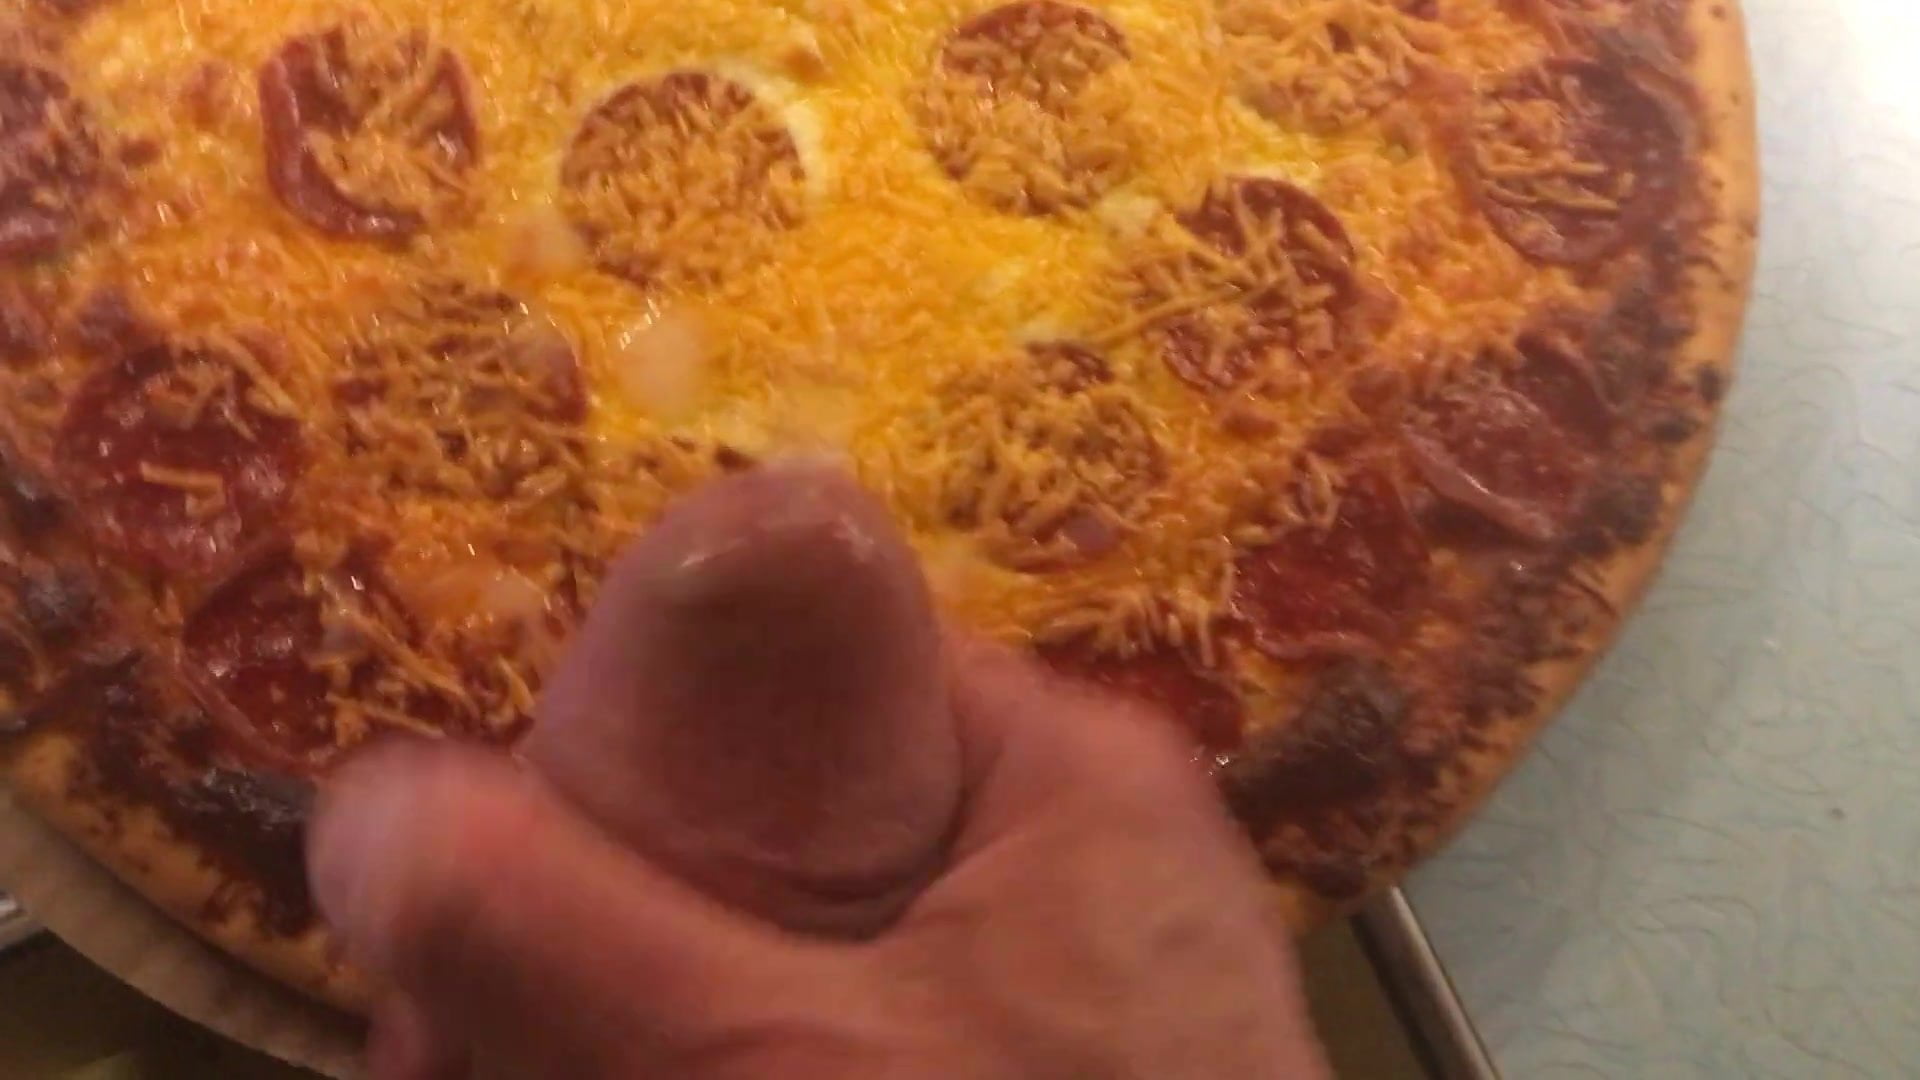 Cumming on pizza